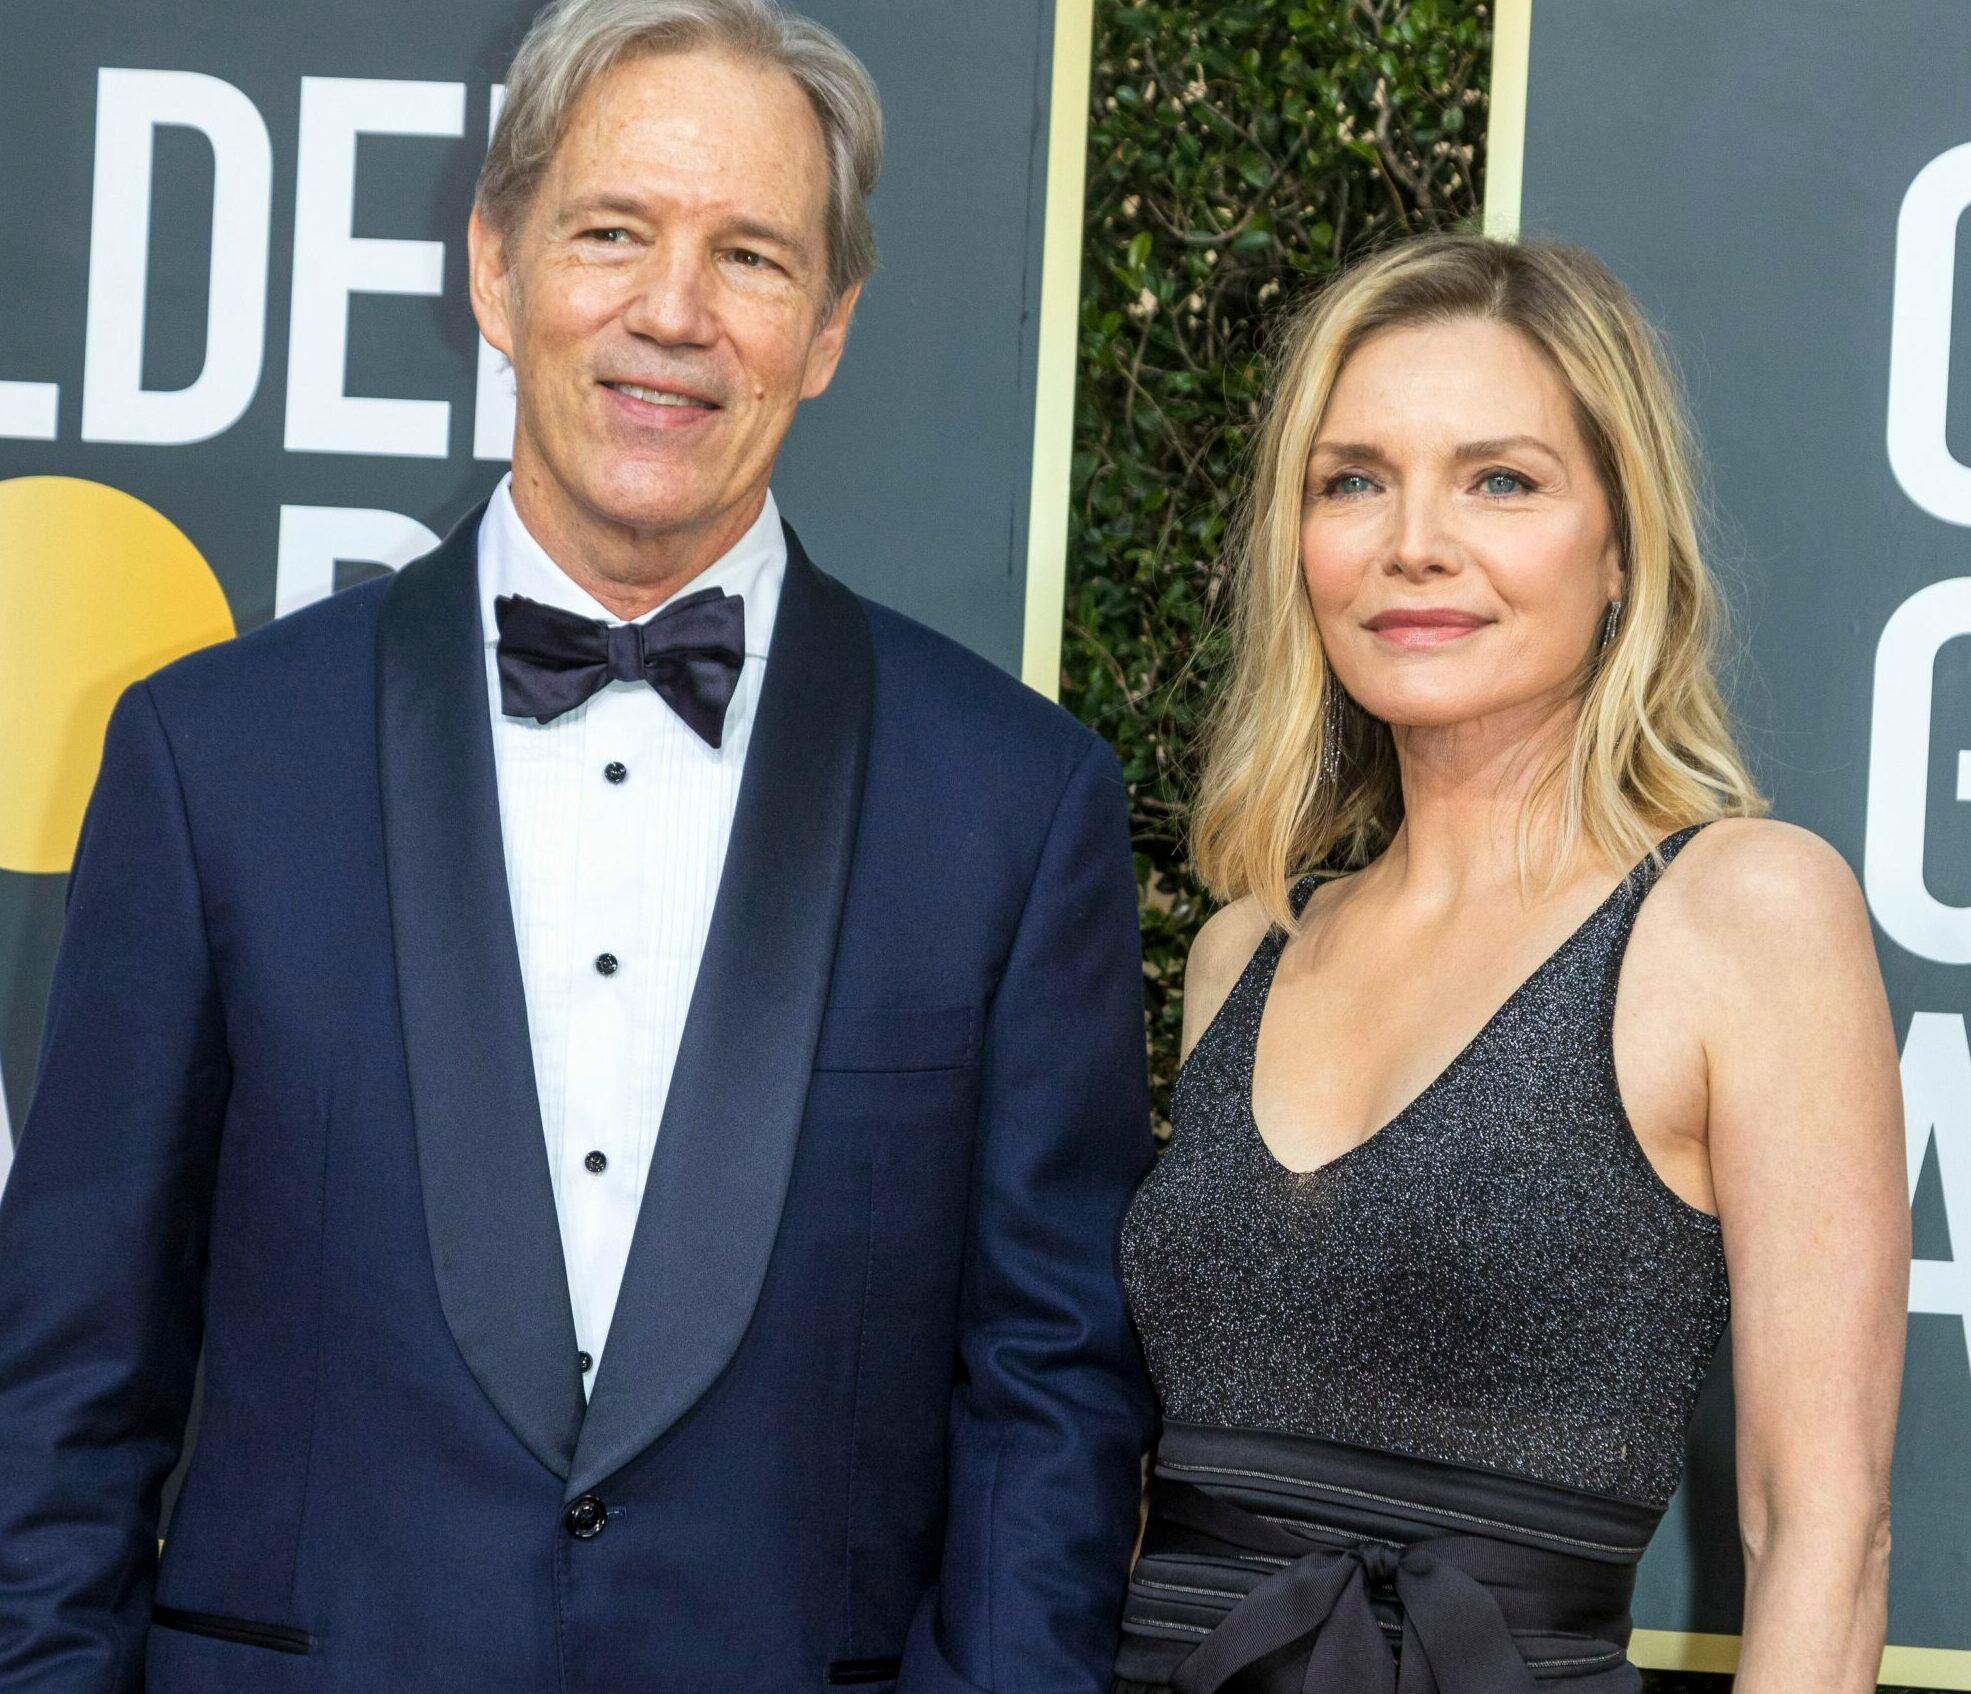 David E. Kelley and Michelle Pfeiffer attend the 77th Annual Golden Globe Awards